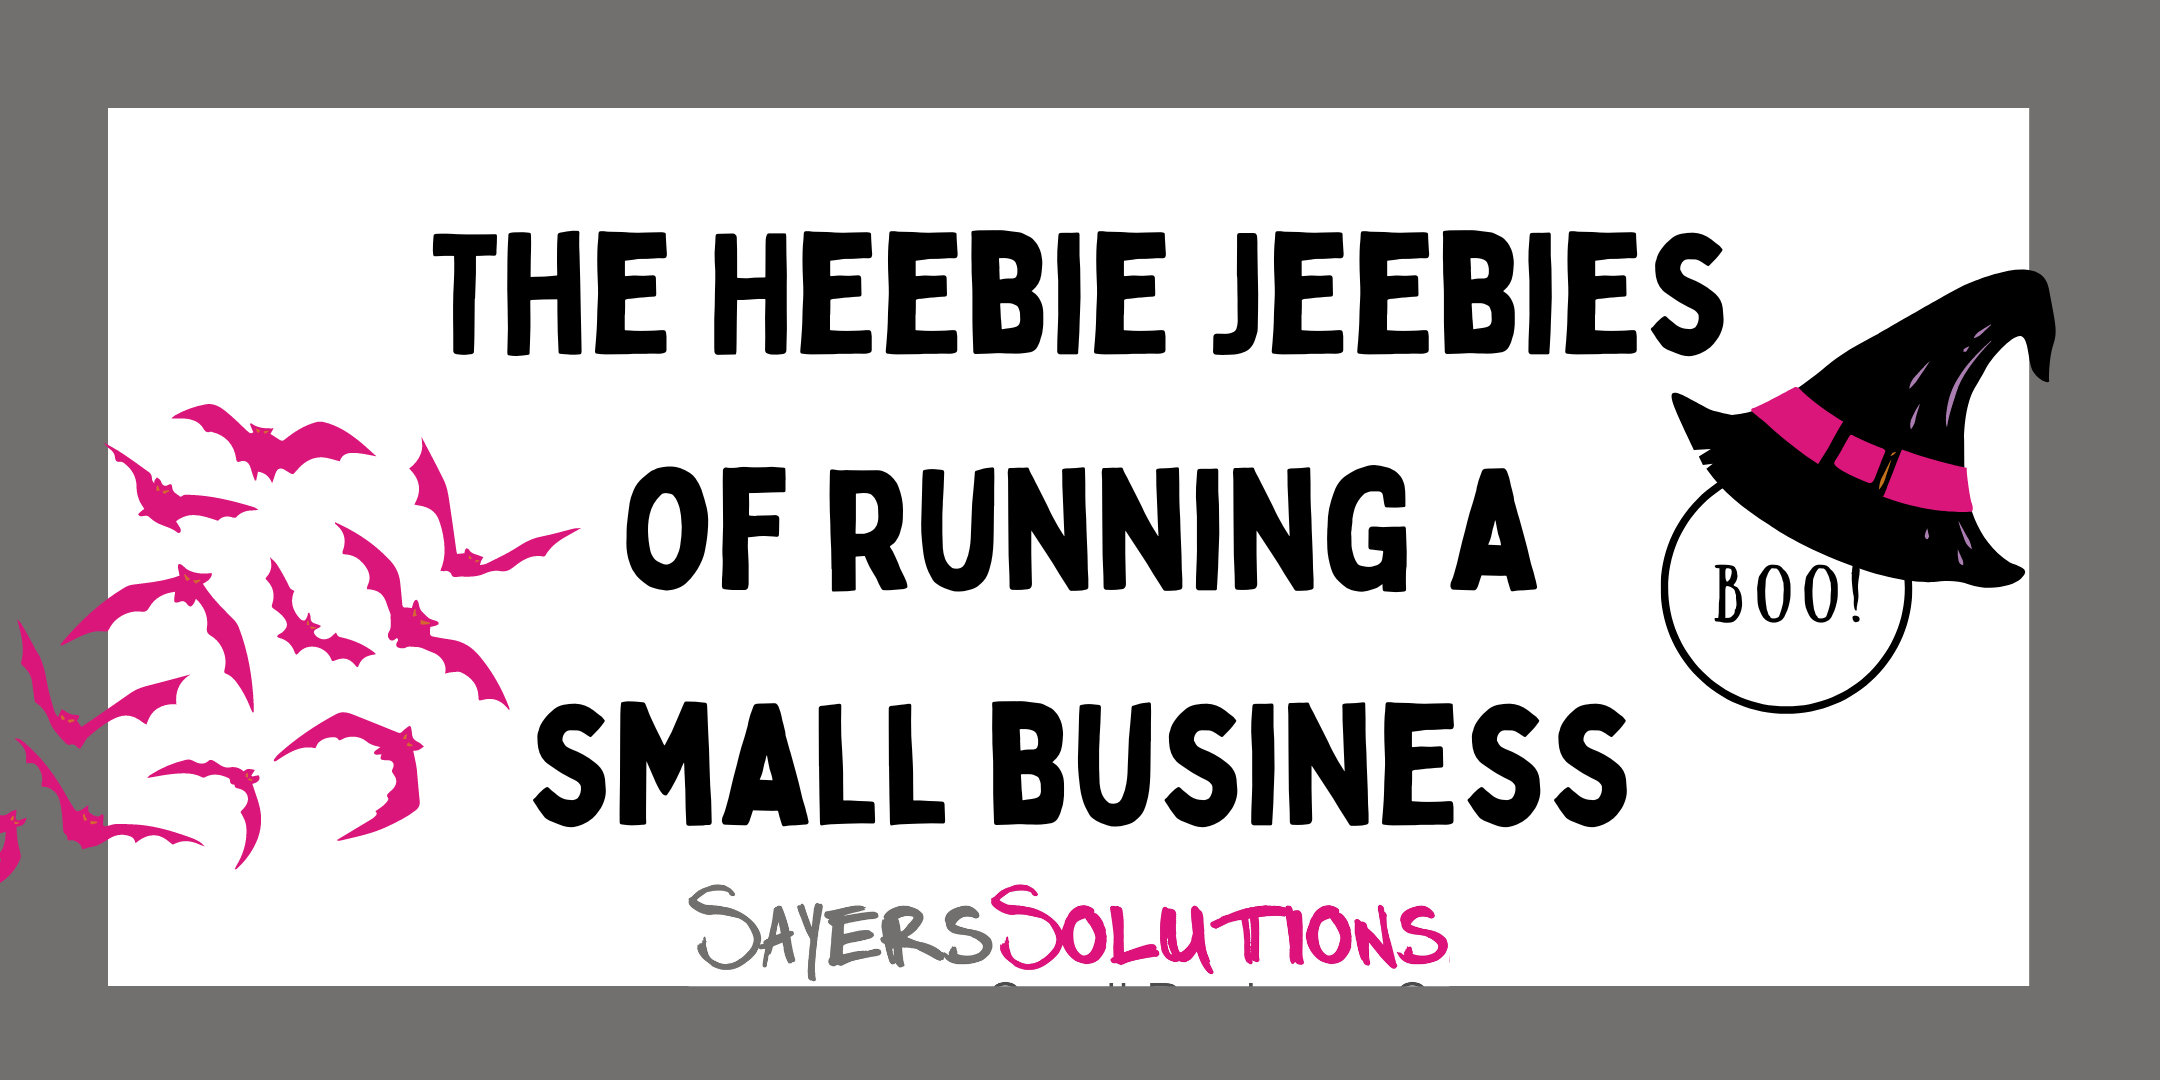 The Heebie Jeebies of running a small business